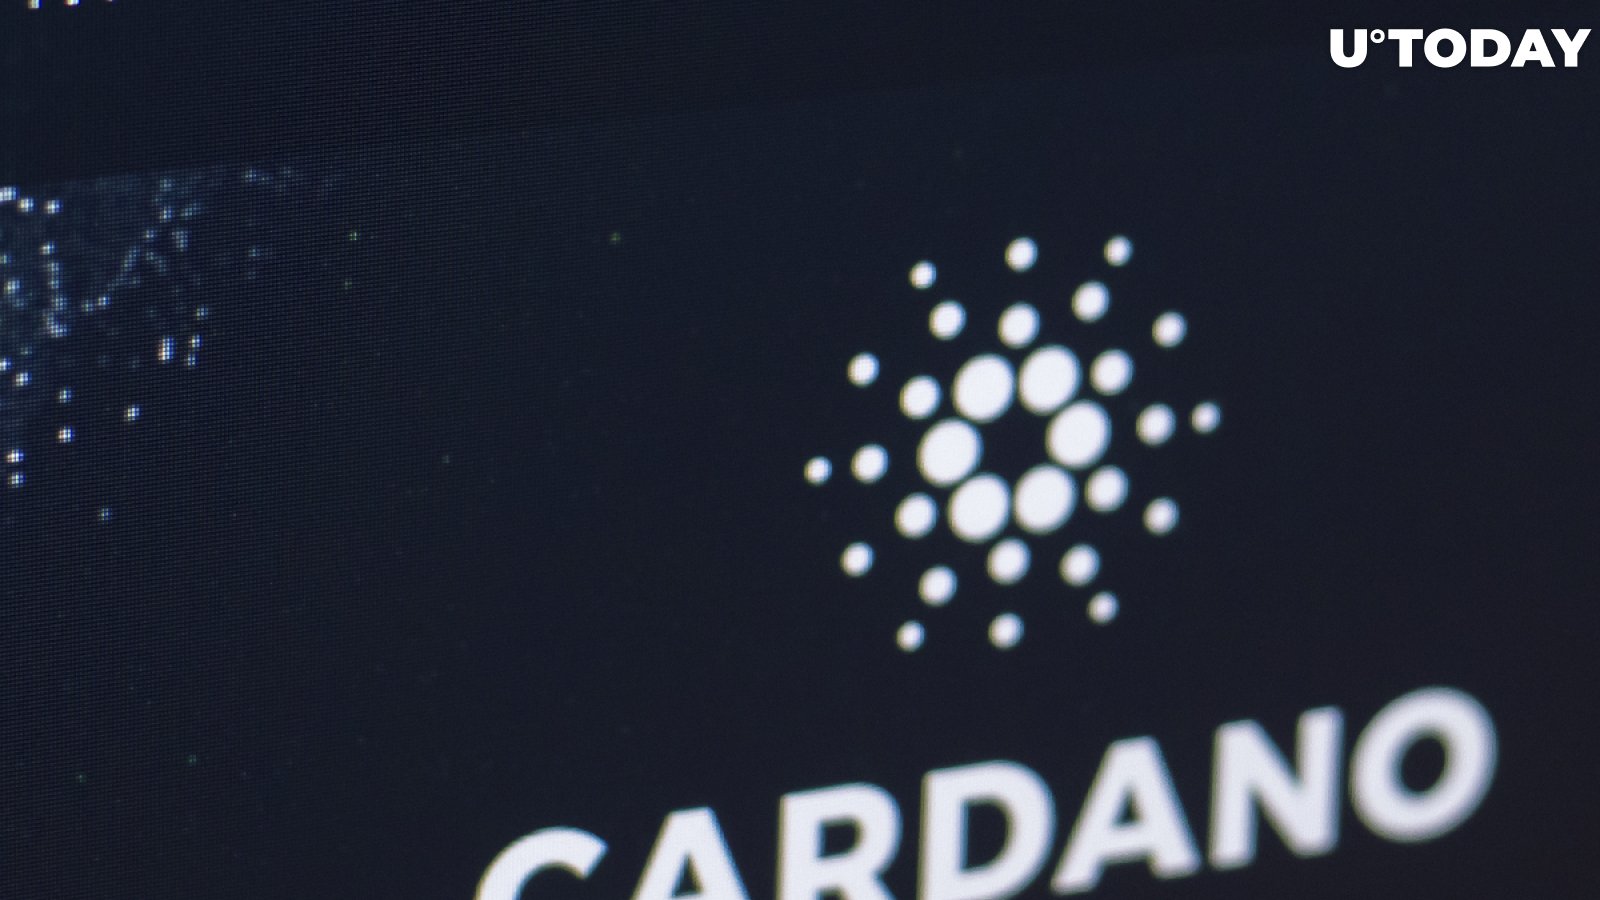 Cardano (ADA) Smart Contract Release to Catalyze Ethereum: Opinion